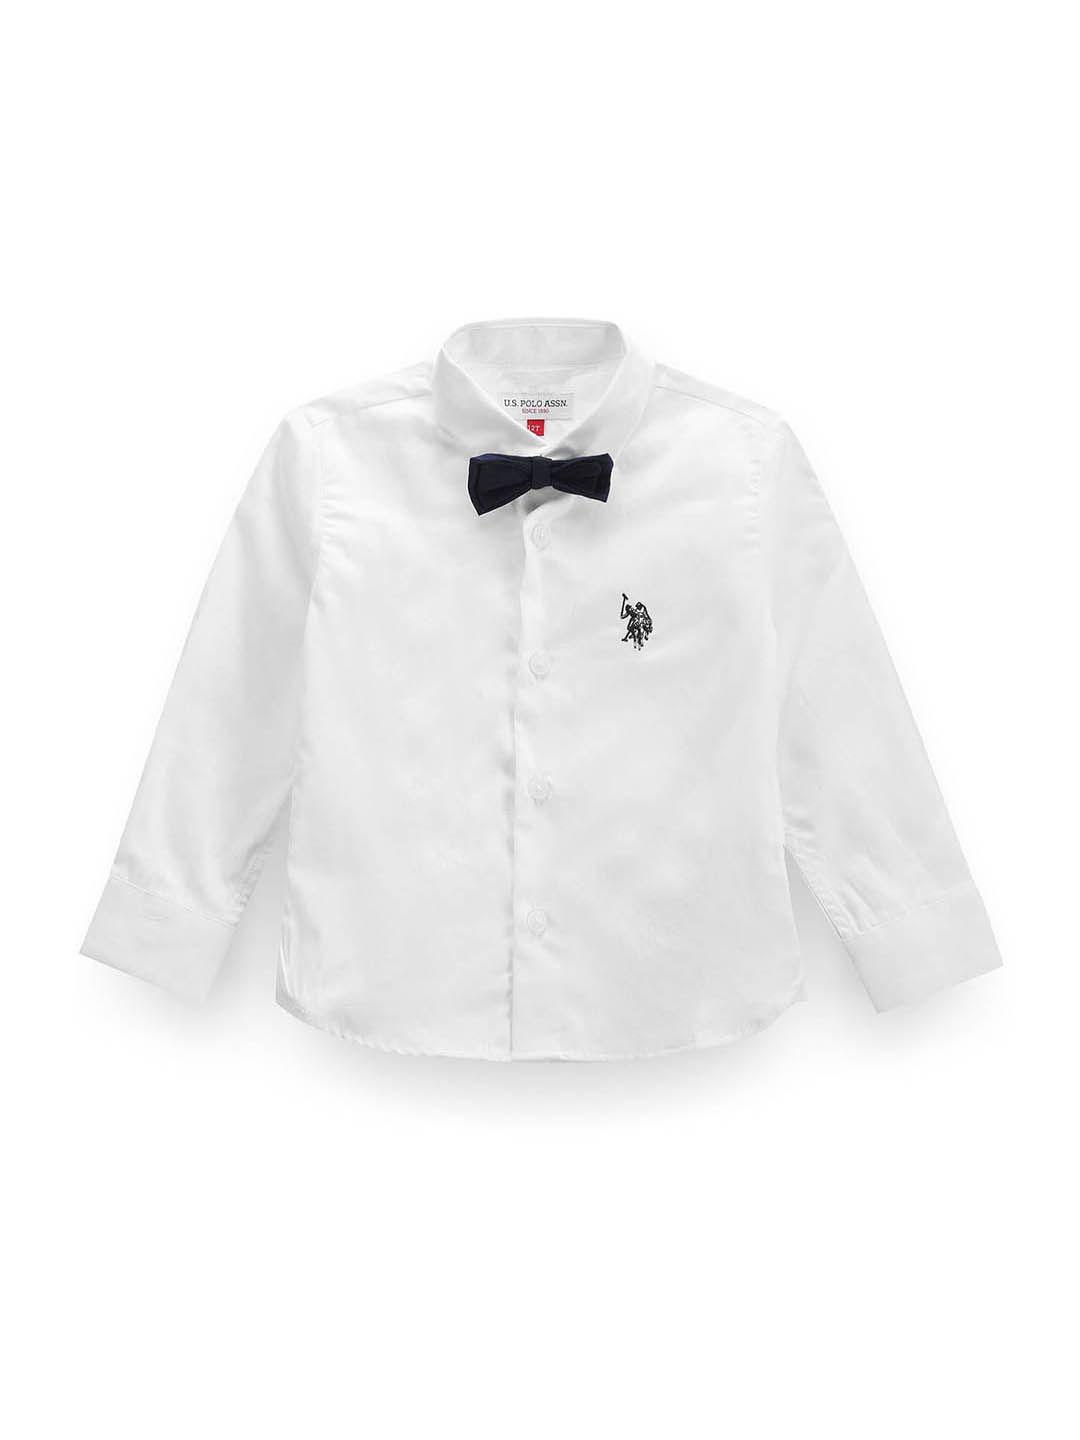 U.S. Polo Assn. Kids Boys Classic Spread Collar Pure Cotton Party Shirt